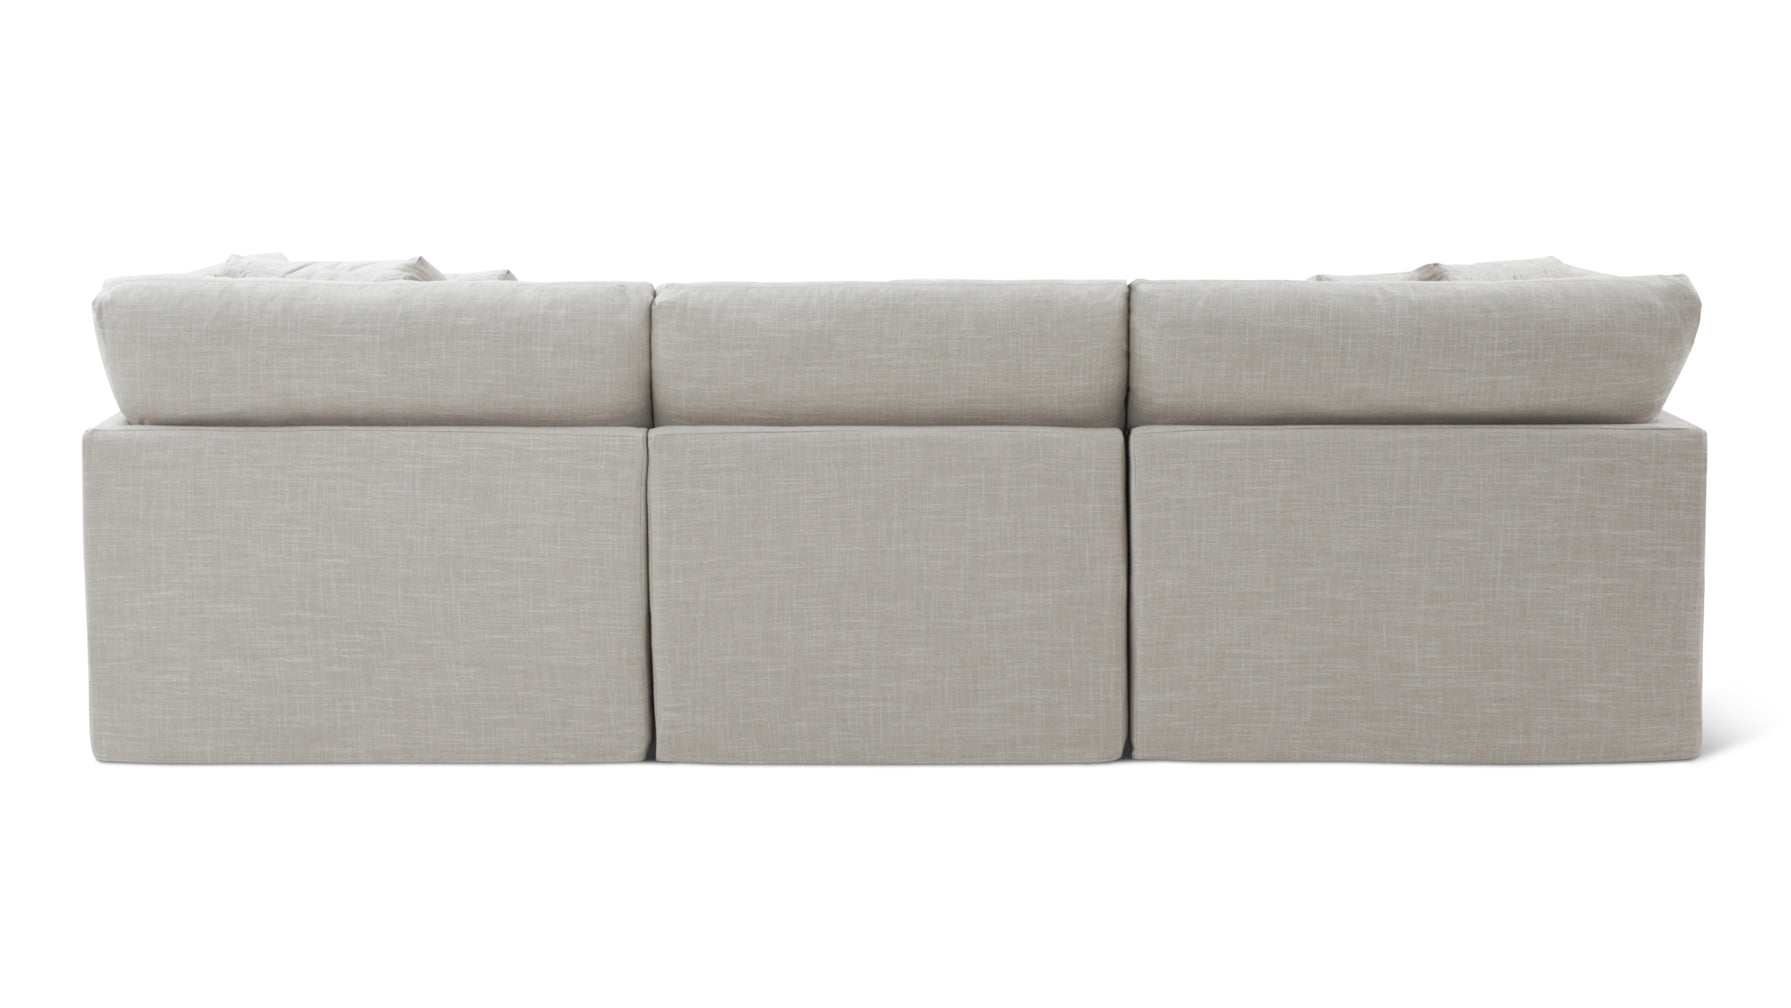 Get Together™ 3-Piece Modular Sofa, Large, Light Pebble - Image 6